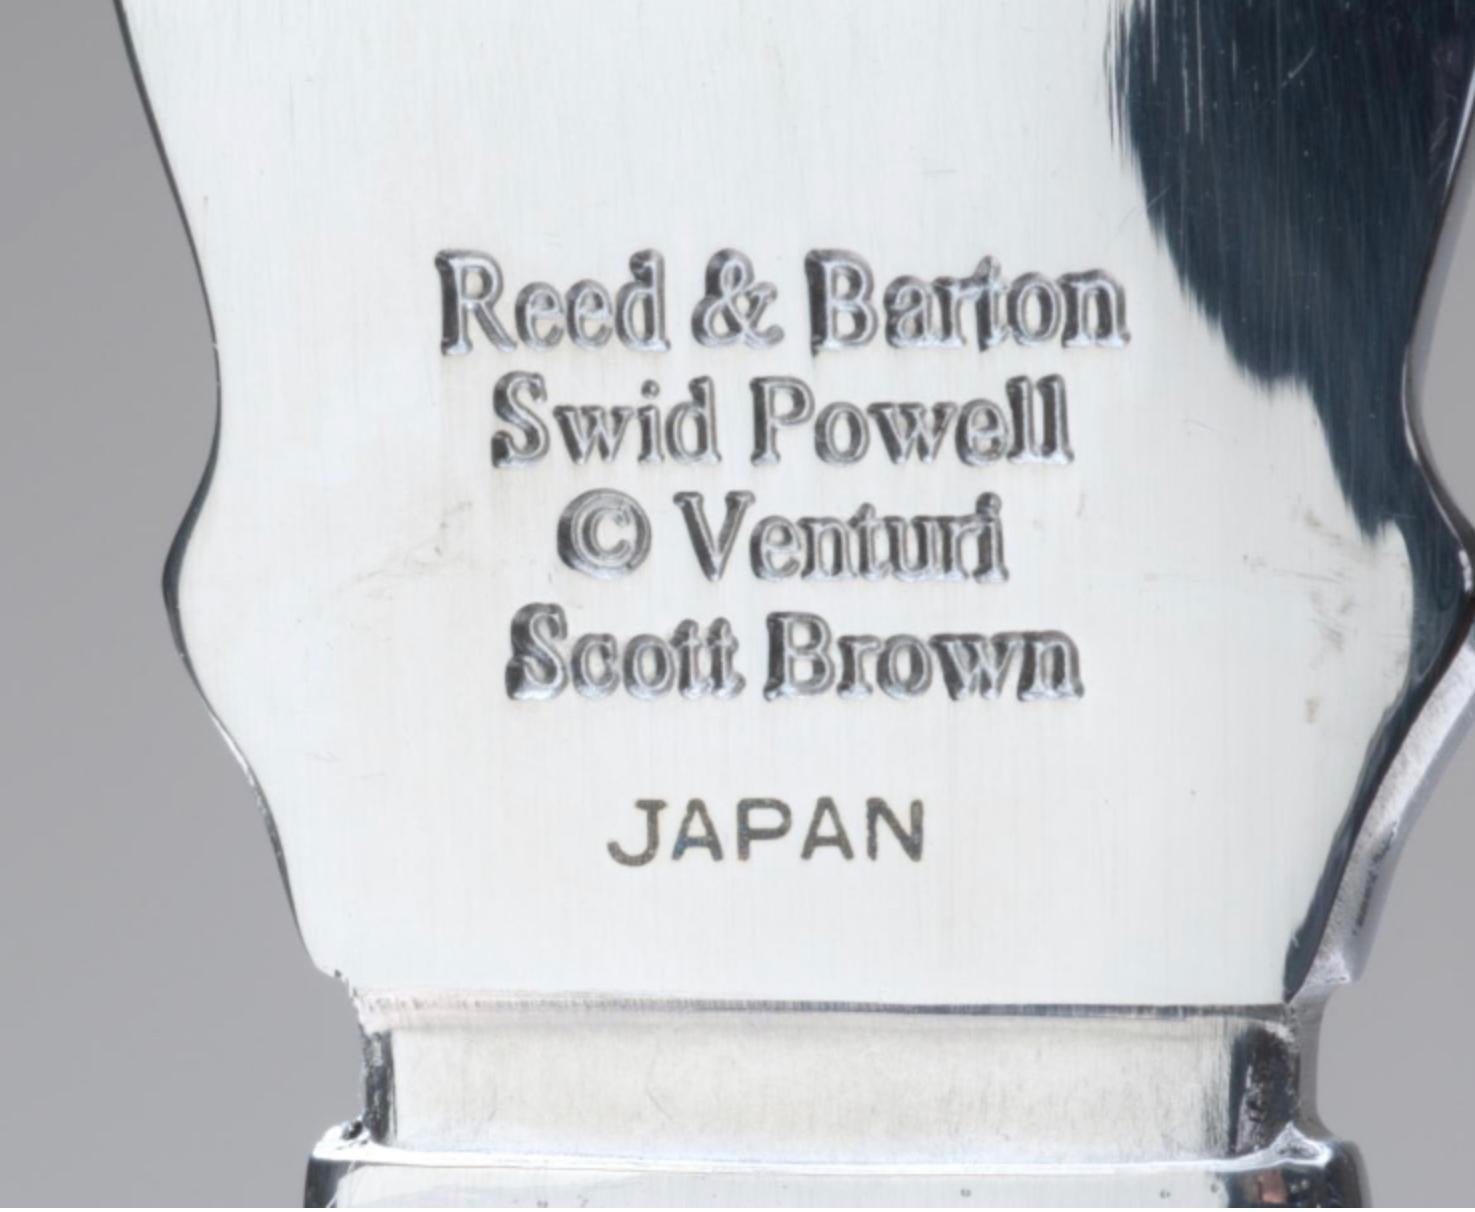 Robert Venturi & Denise Scott Brown for Swid Powell, Reed & Barton Postmodern flatware set. Stainless steel. Made in Japan. This iconic postmodern multi-motif flatware pattern is based on the classical orders was designed by Robert Venturi and